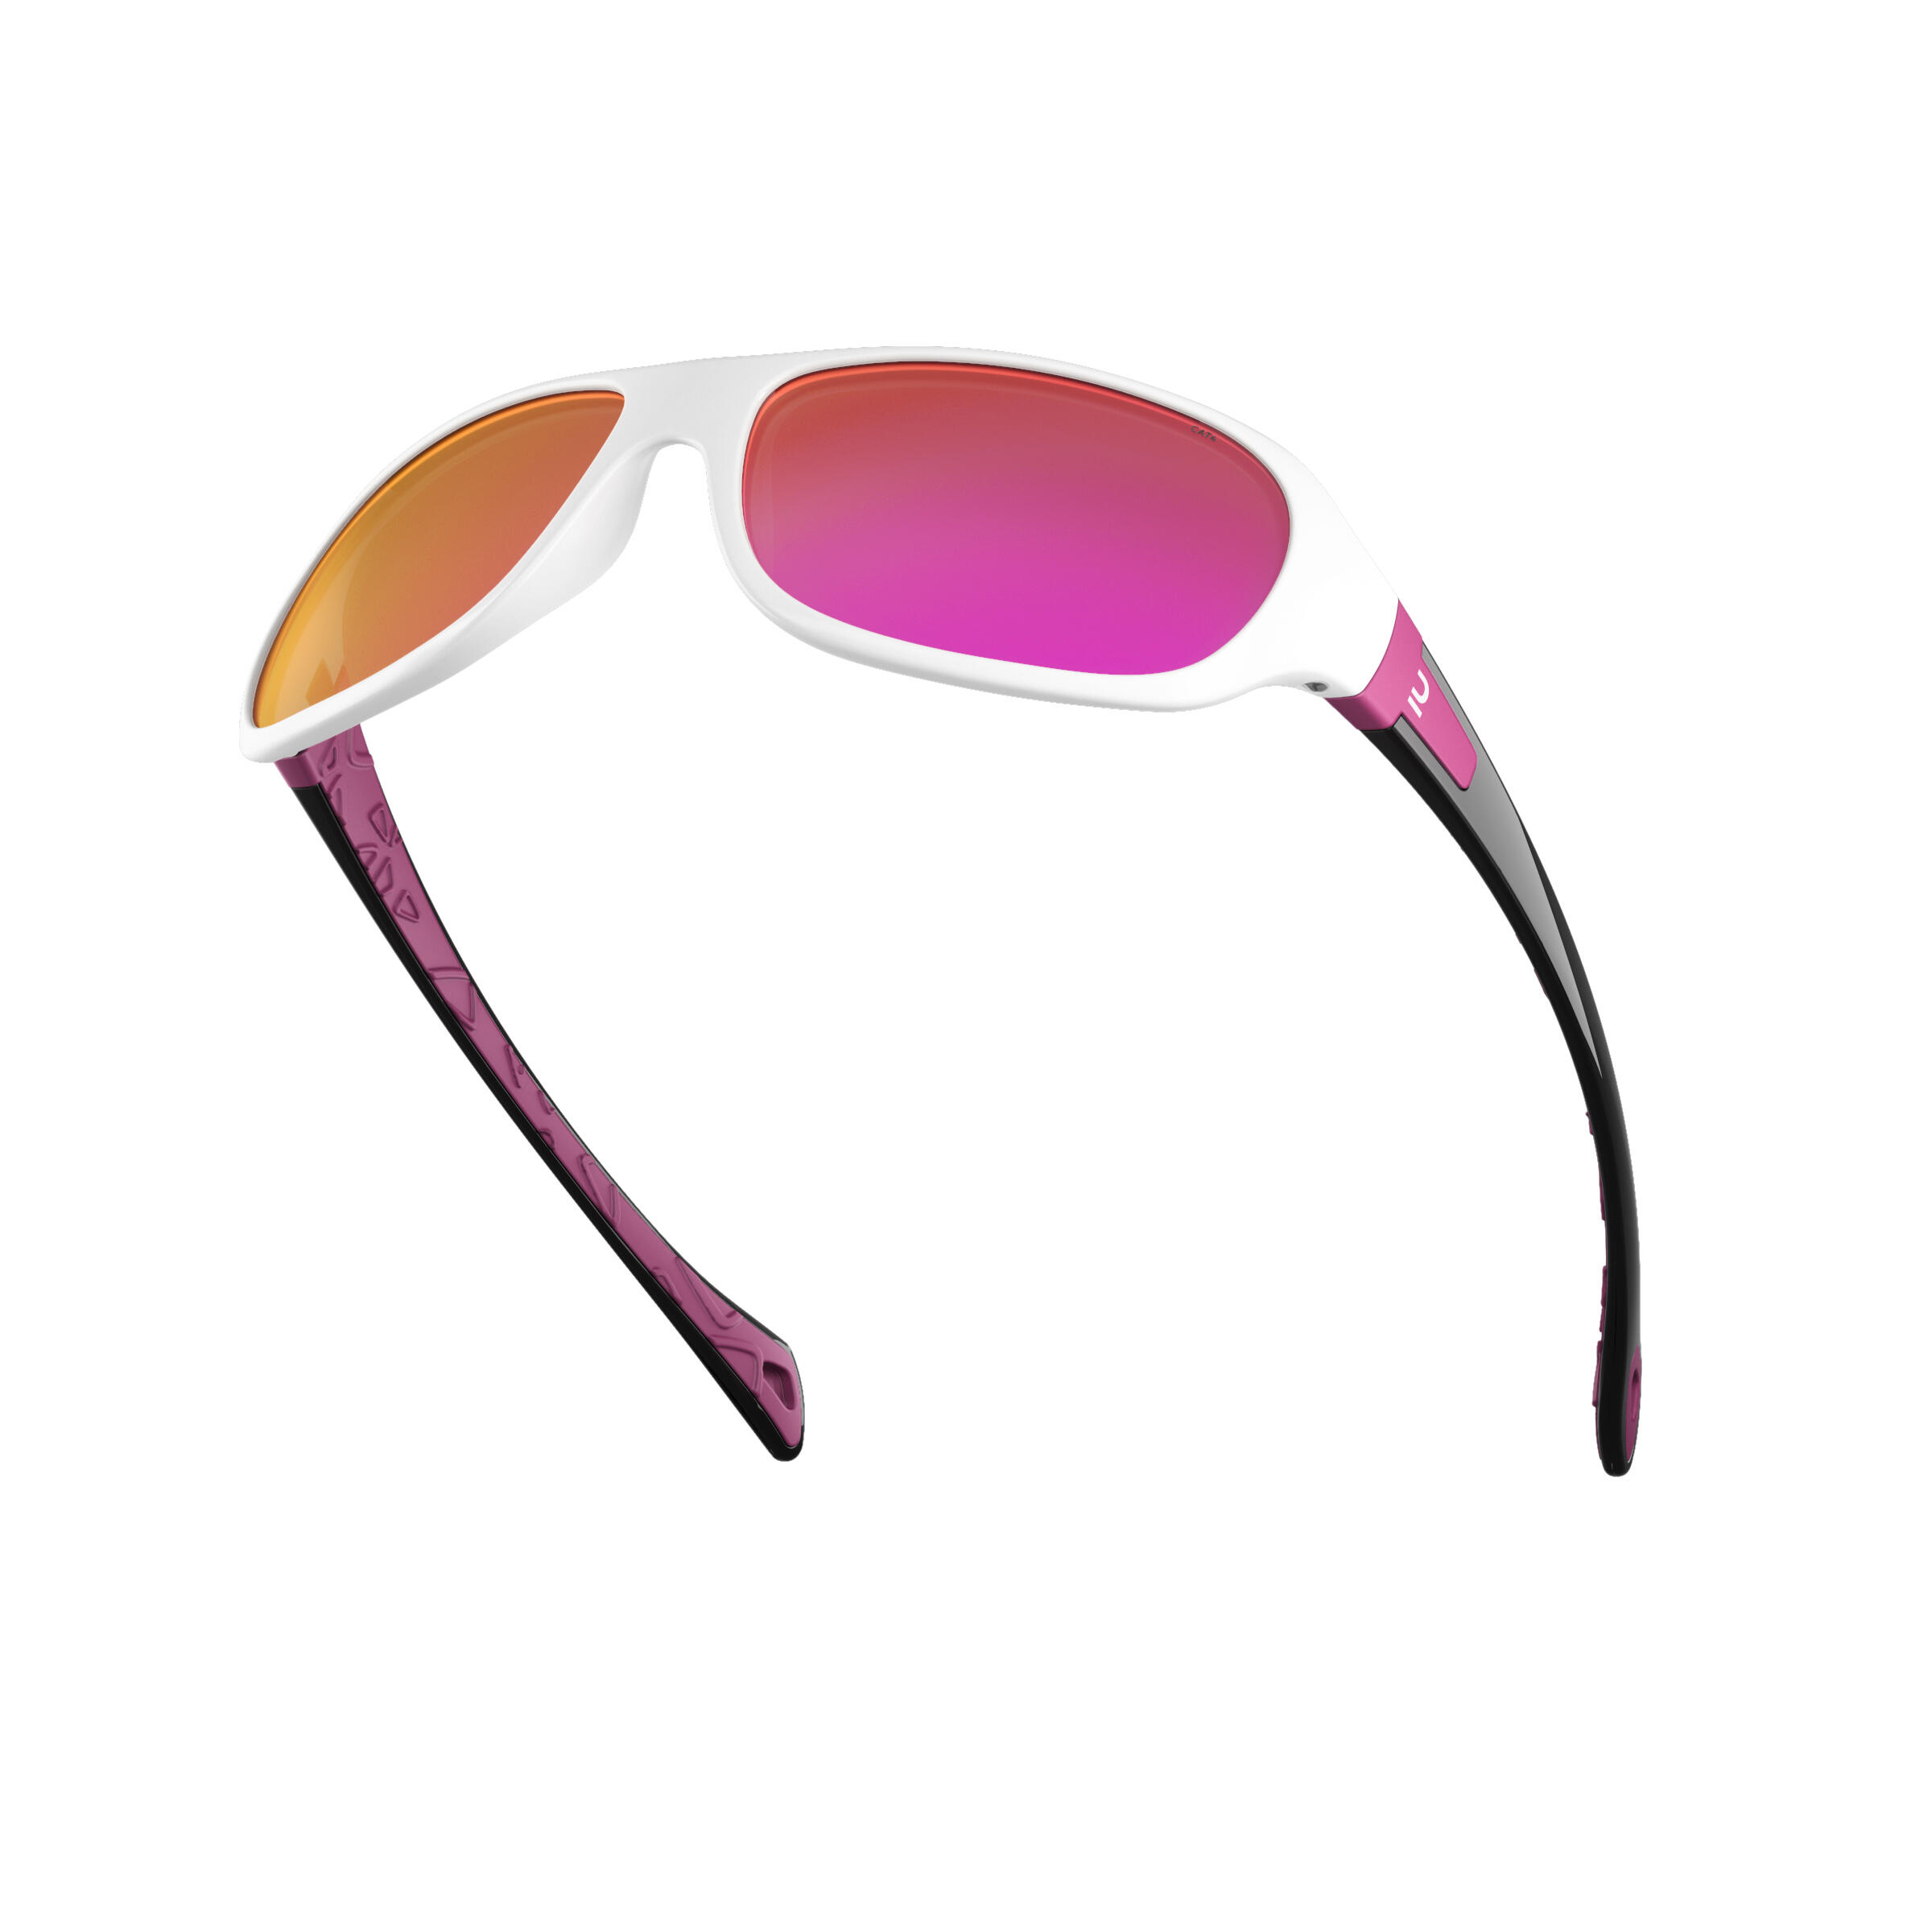 Kids Hiking Sunglasses - MH T500 - age 6-10 - Category 4 3/14